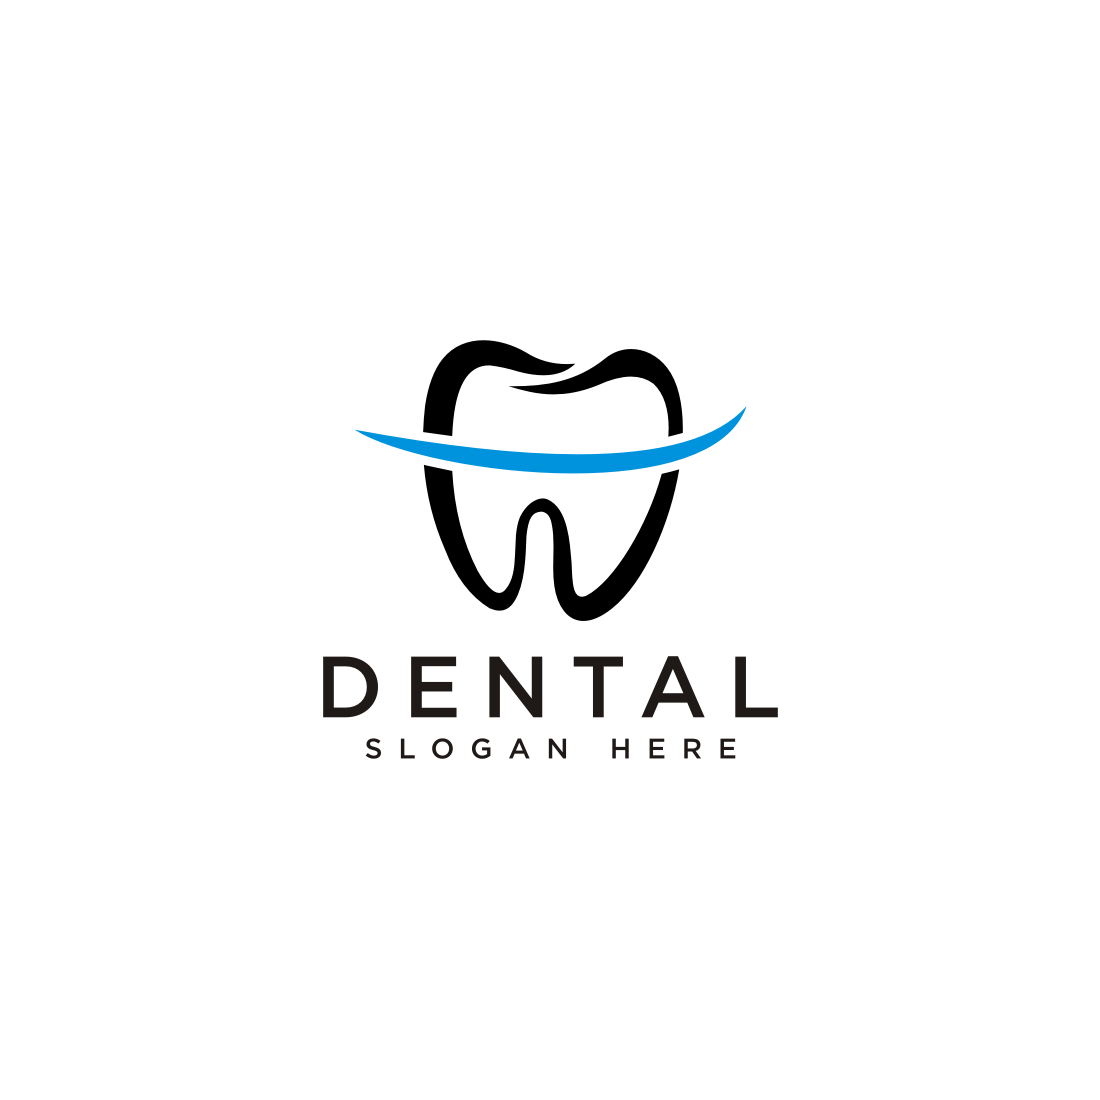 dental logo vector design cover image.